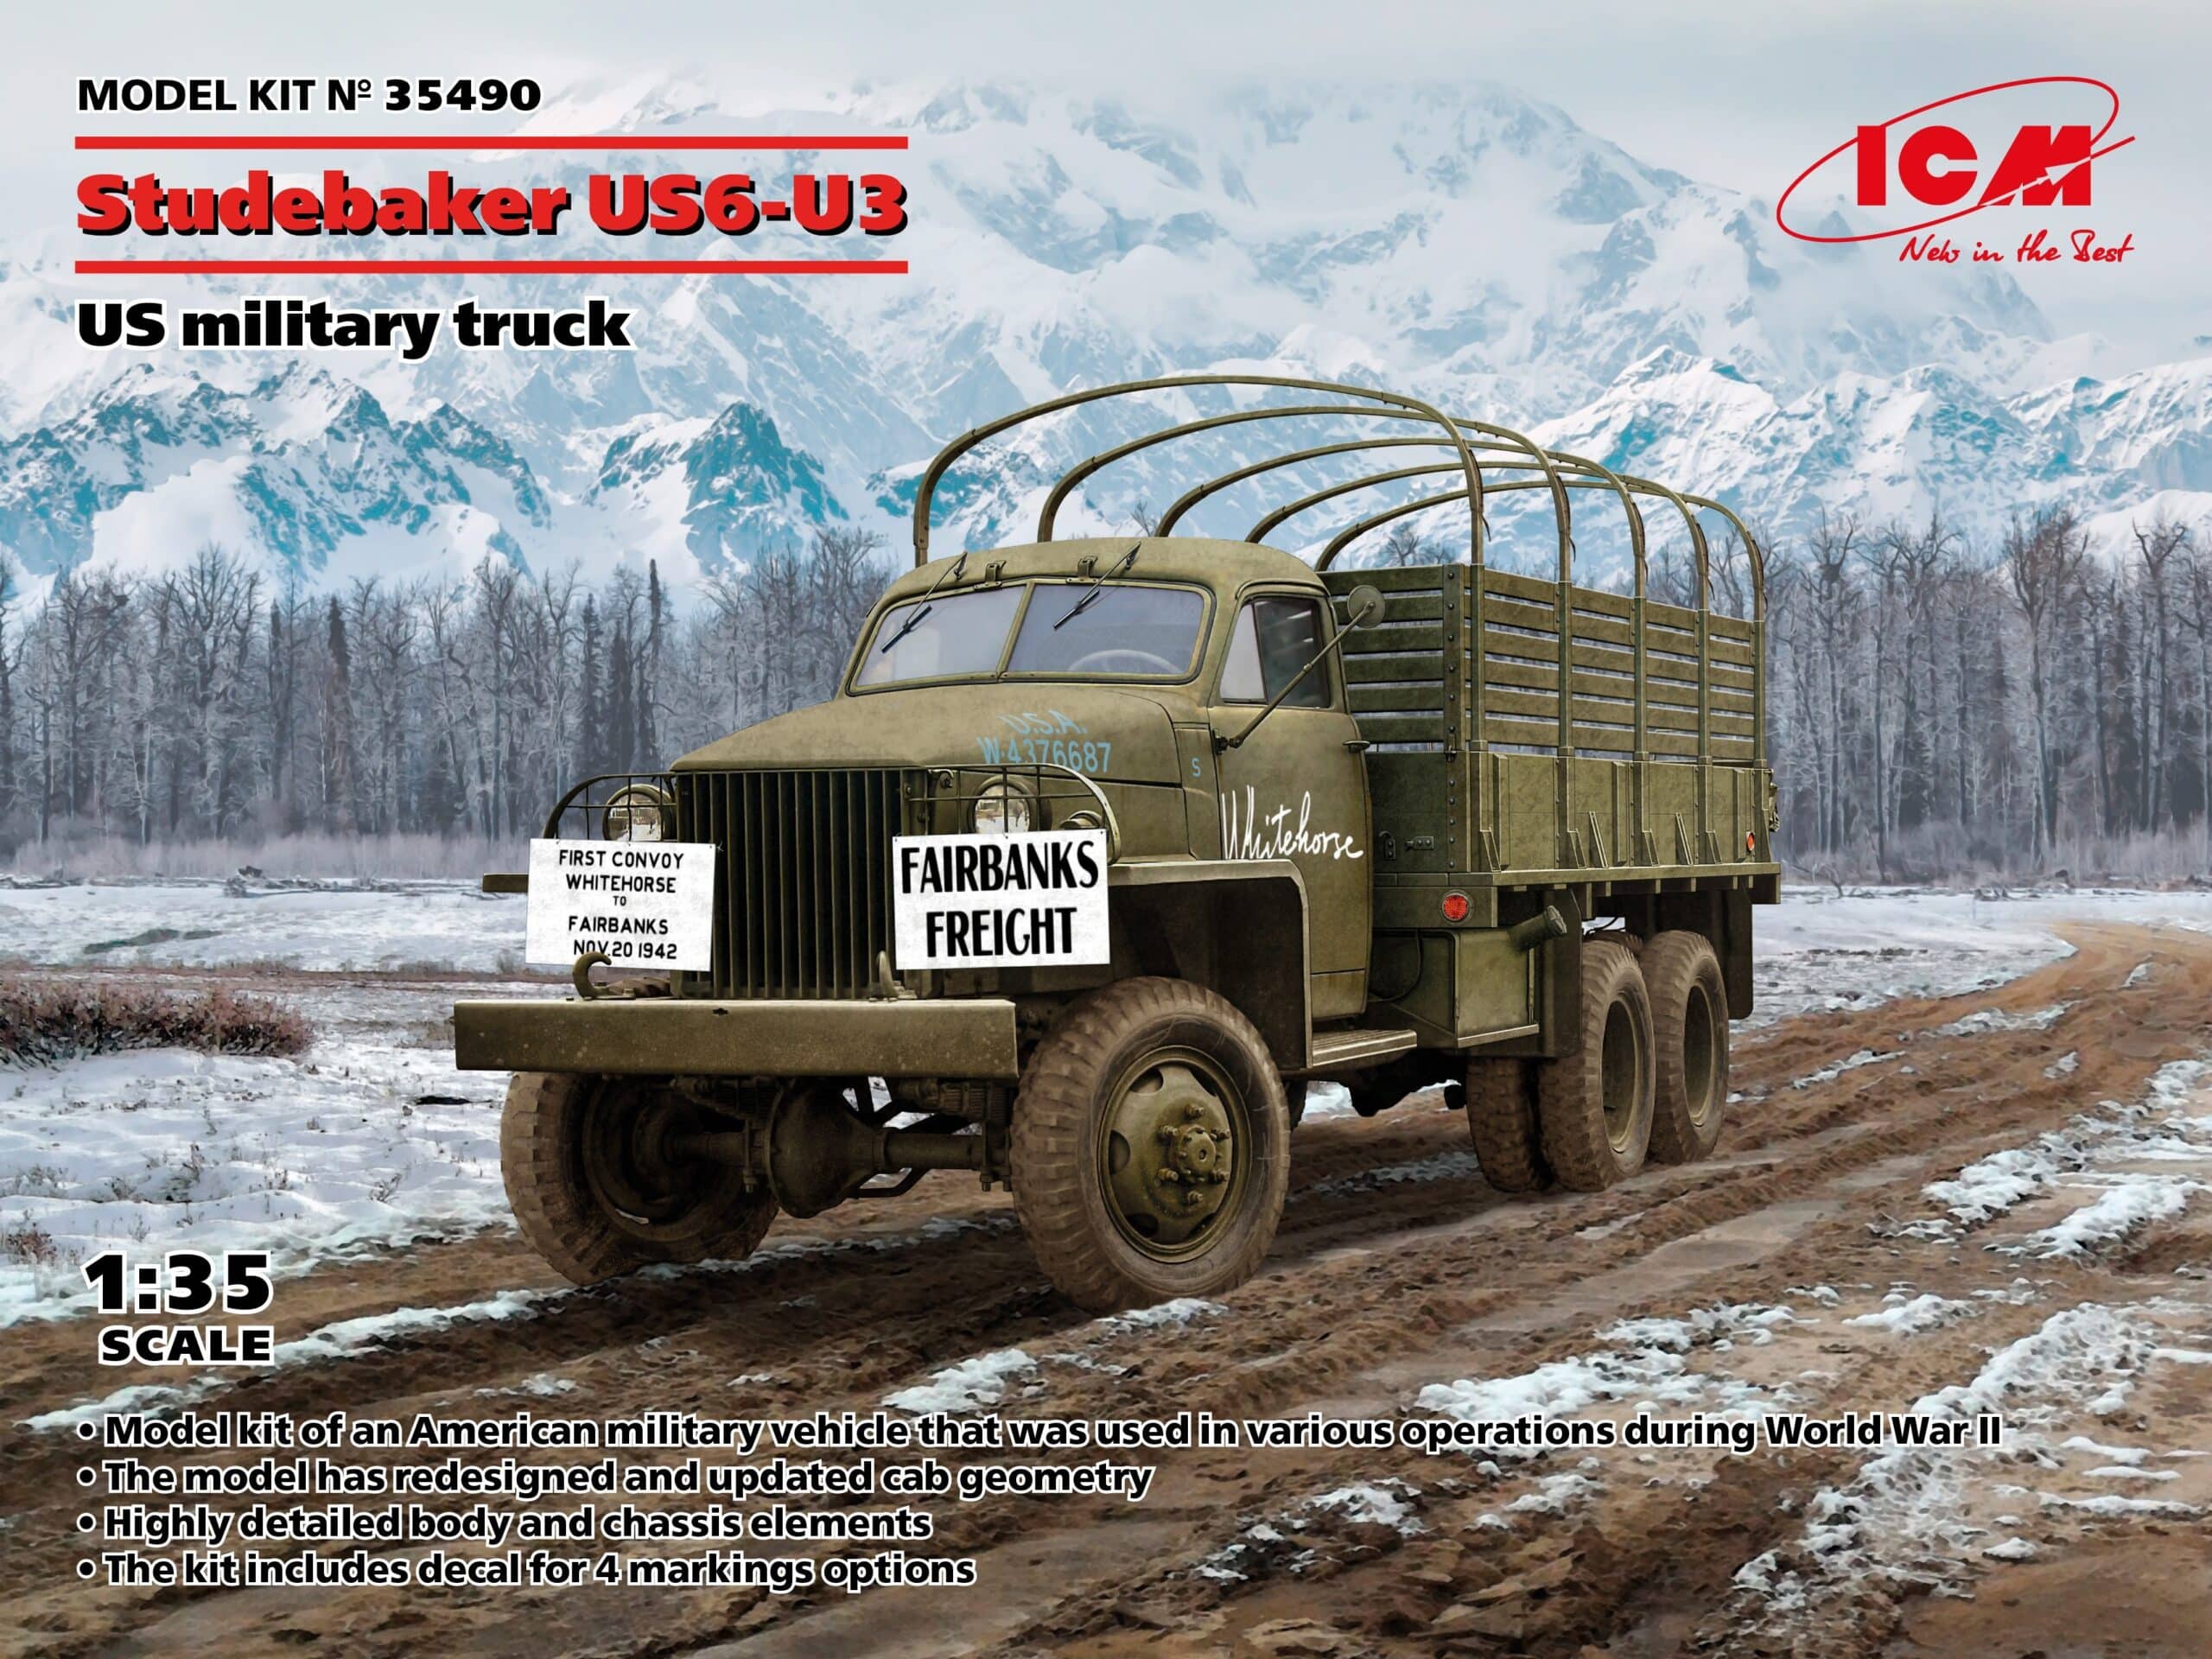 ICM Model "1/35 Scale Studebaker US6-U3 US military truck